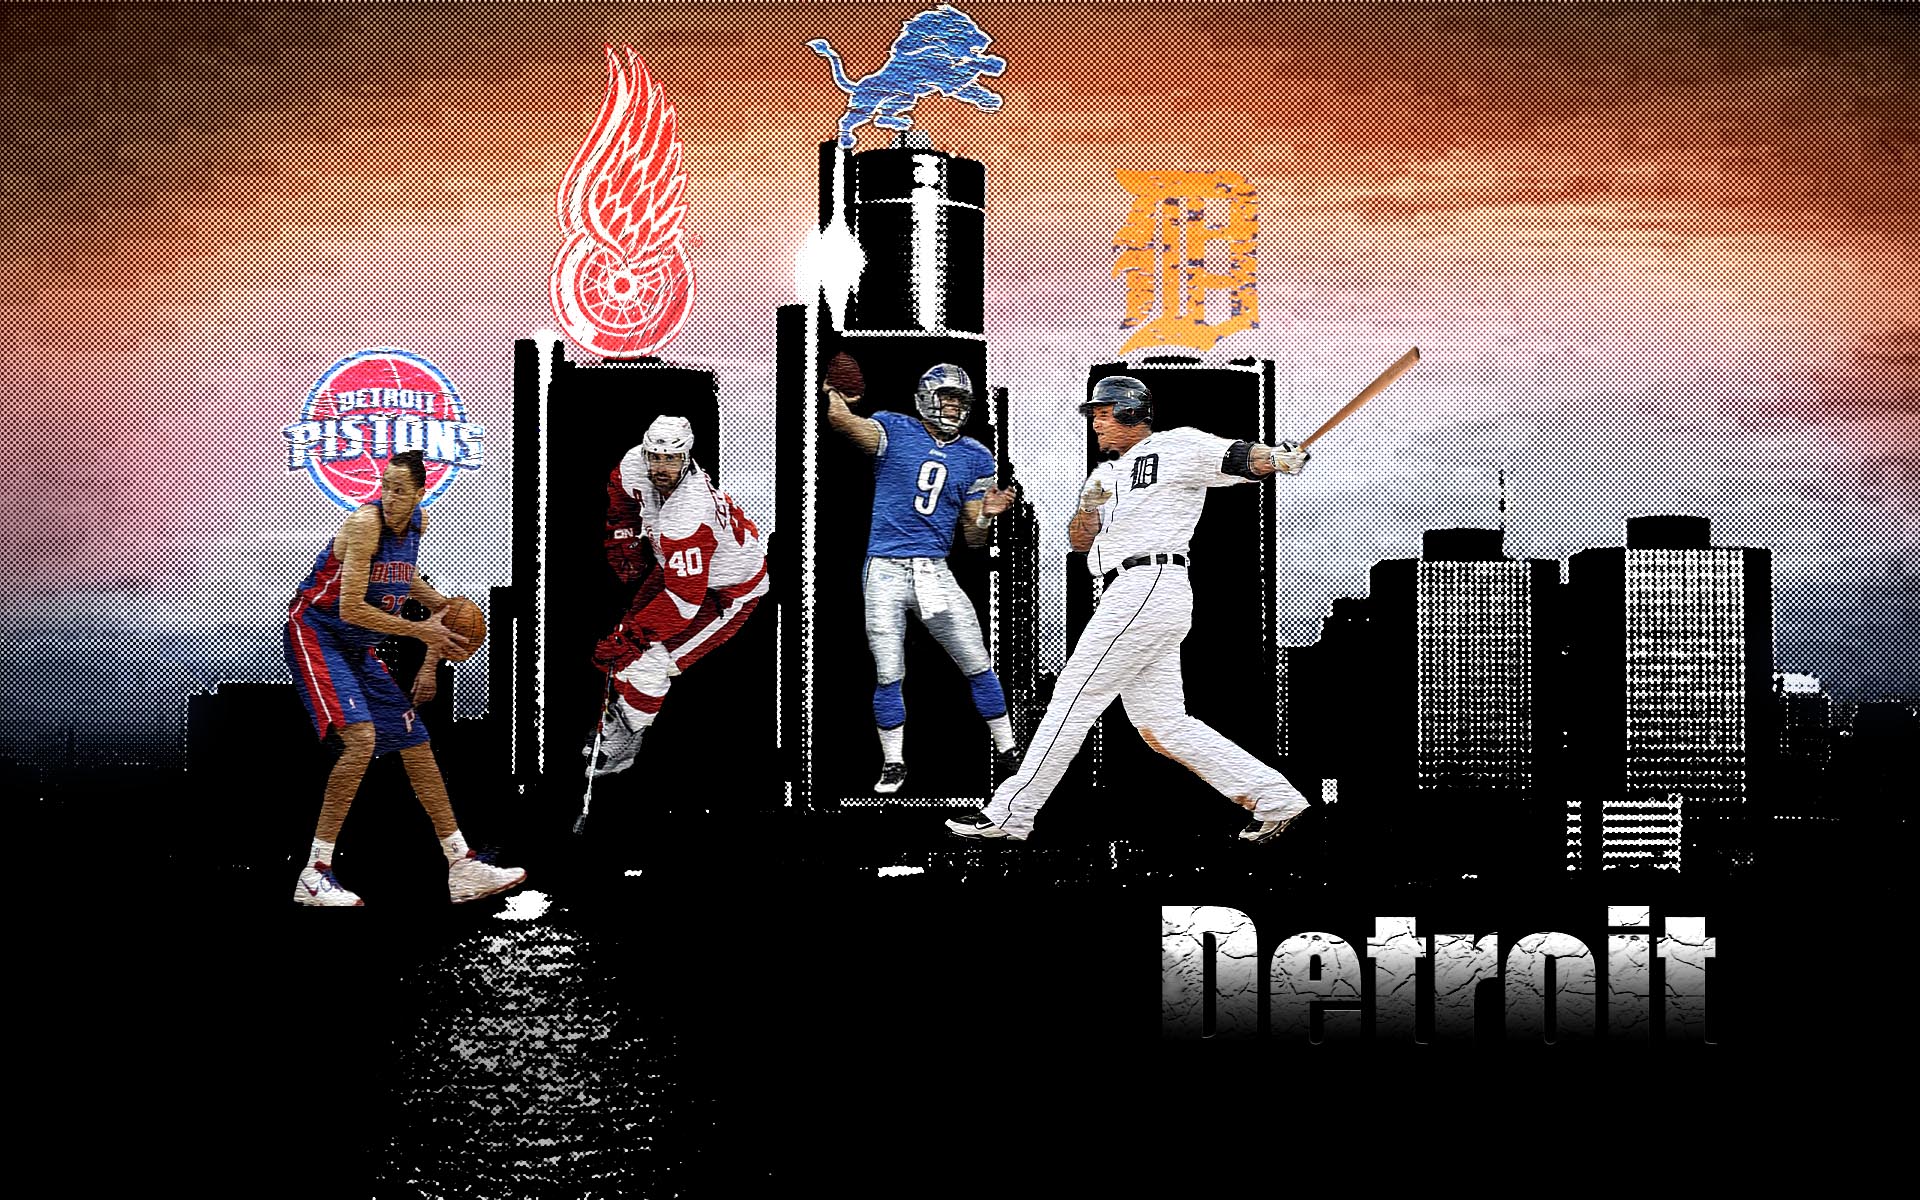 Detroit Sports Teams Wallpaper - WallpaperSafari